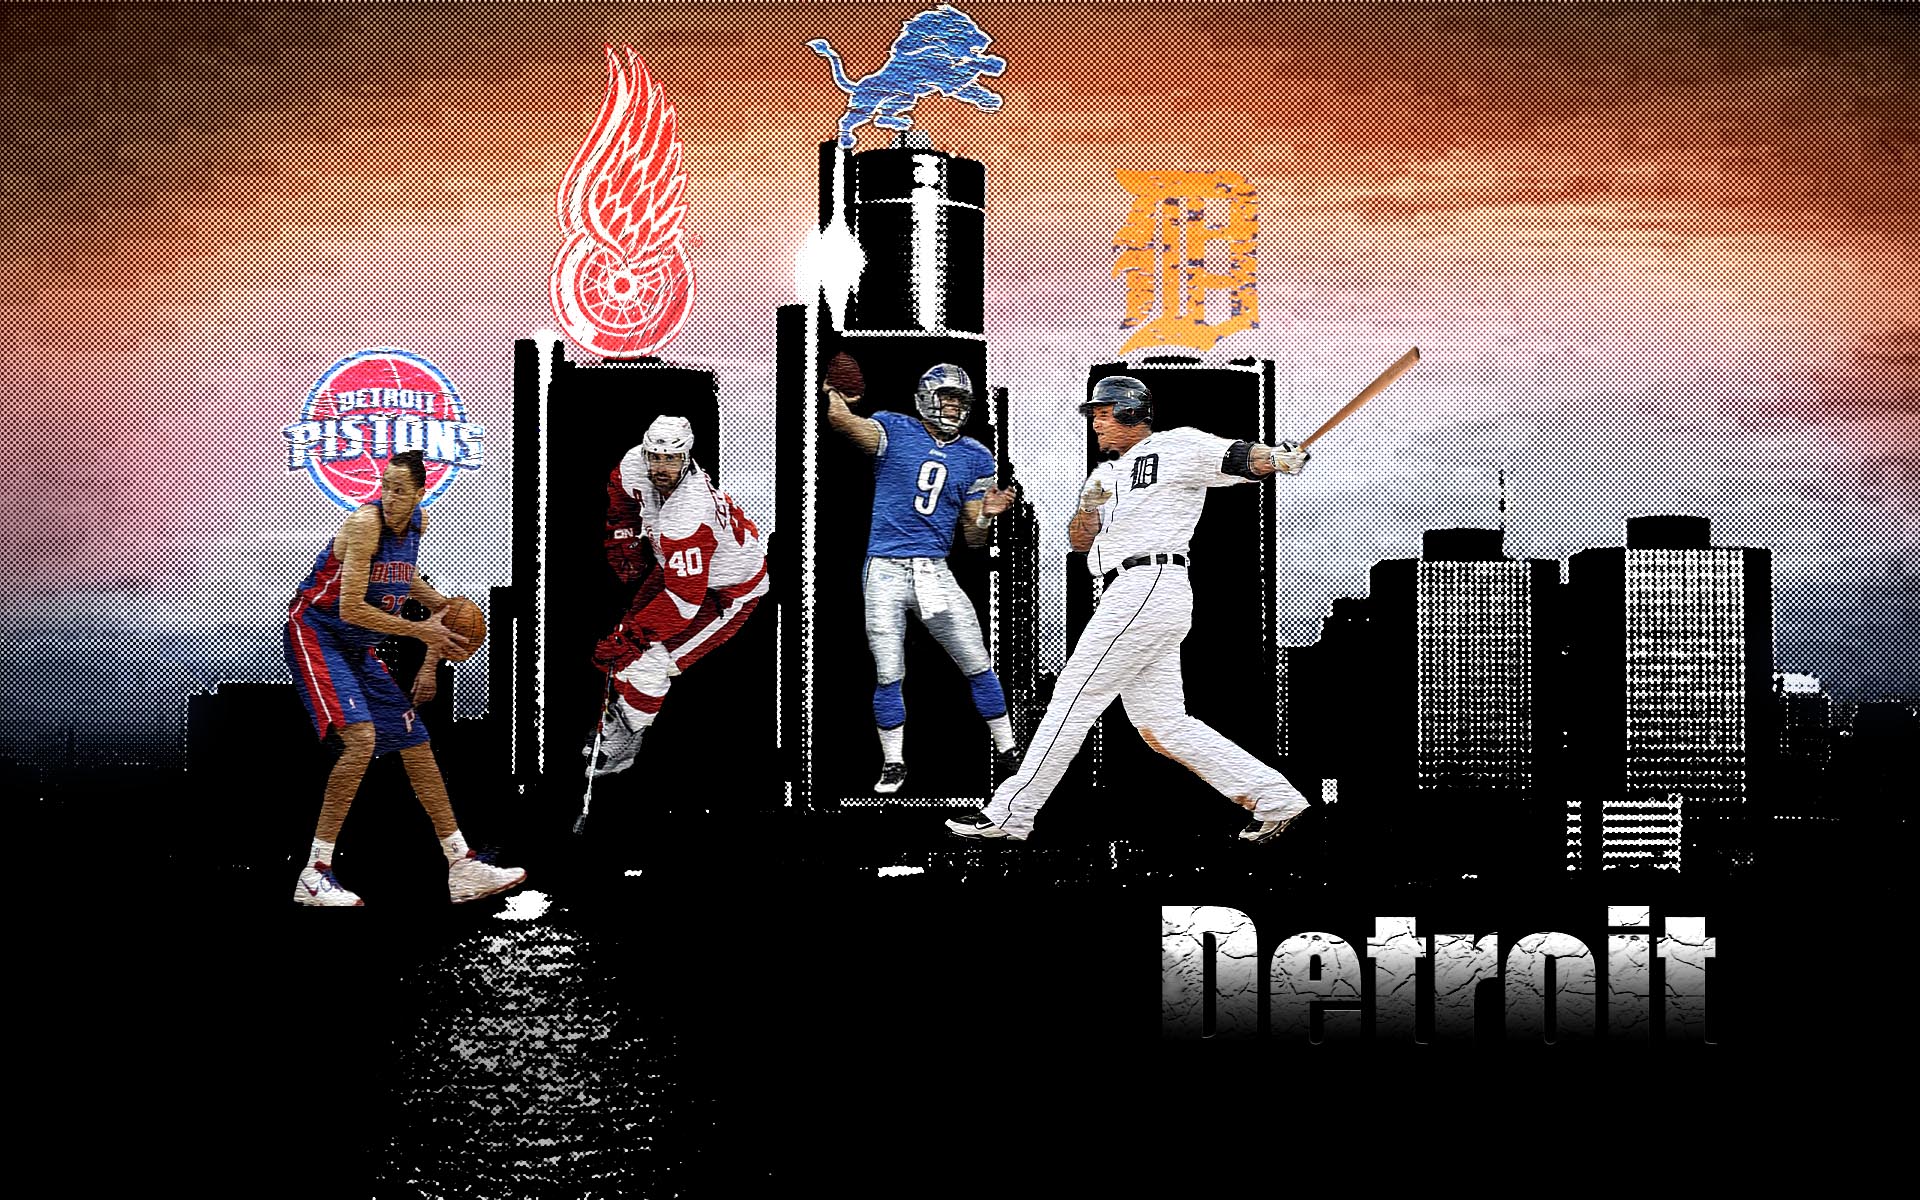 Detroit Sports Teams Wallpaper - WallpaperSafari